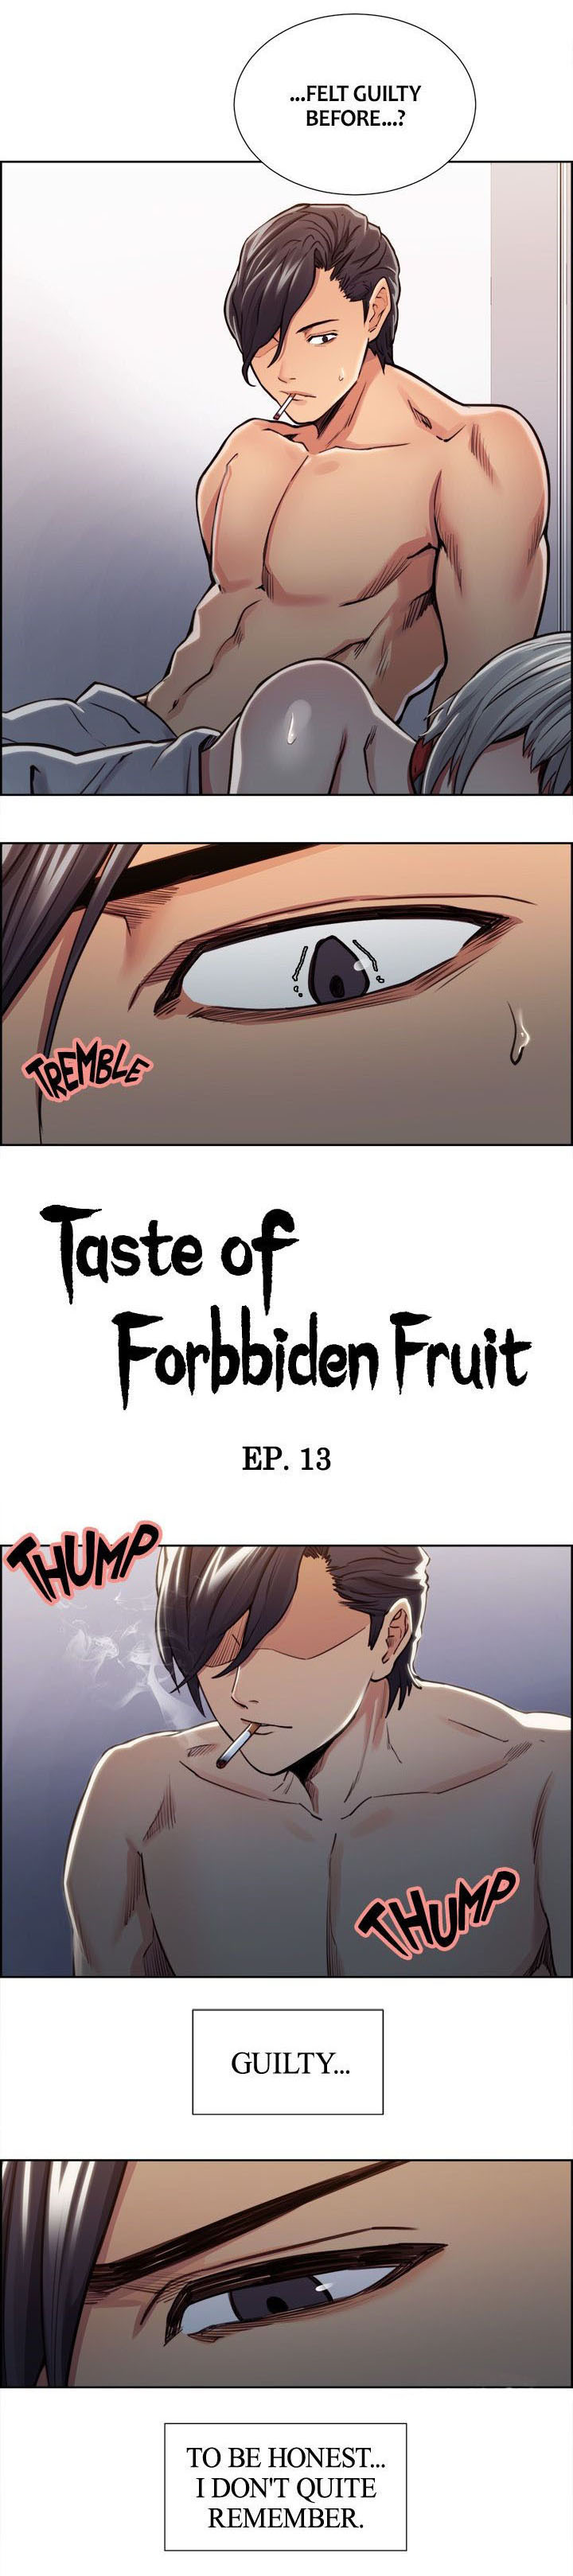 [Serious] Taste of Forbbiden Fruit Ch.17/24